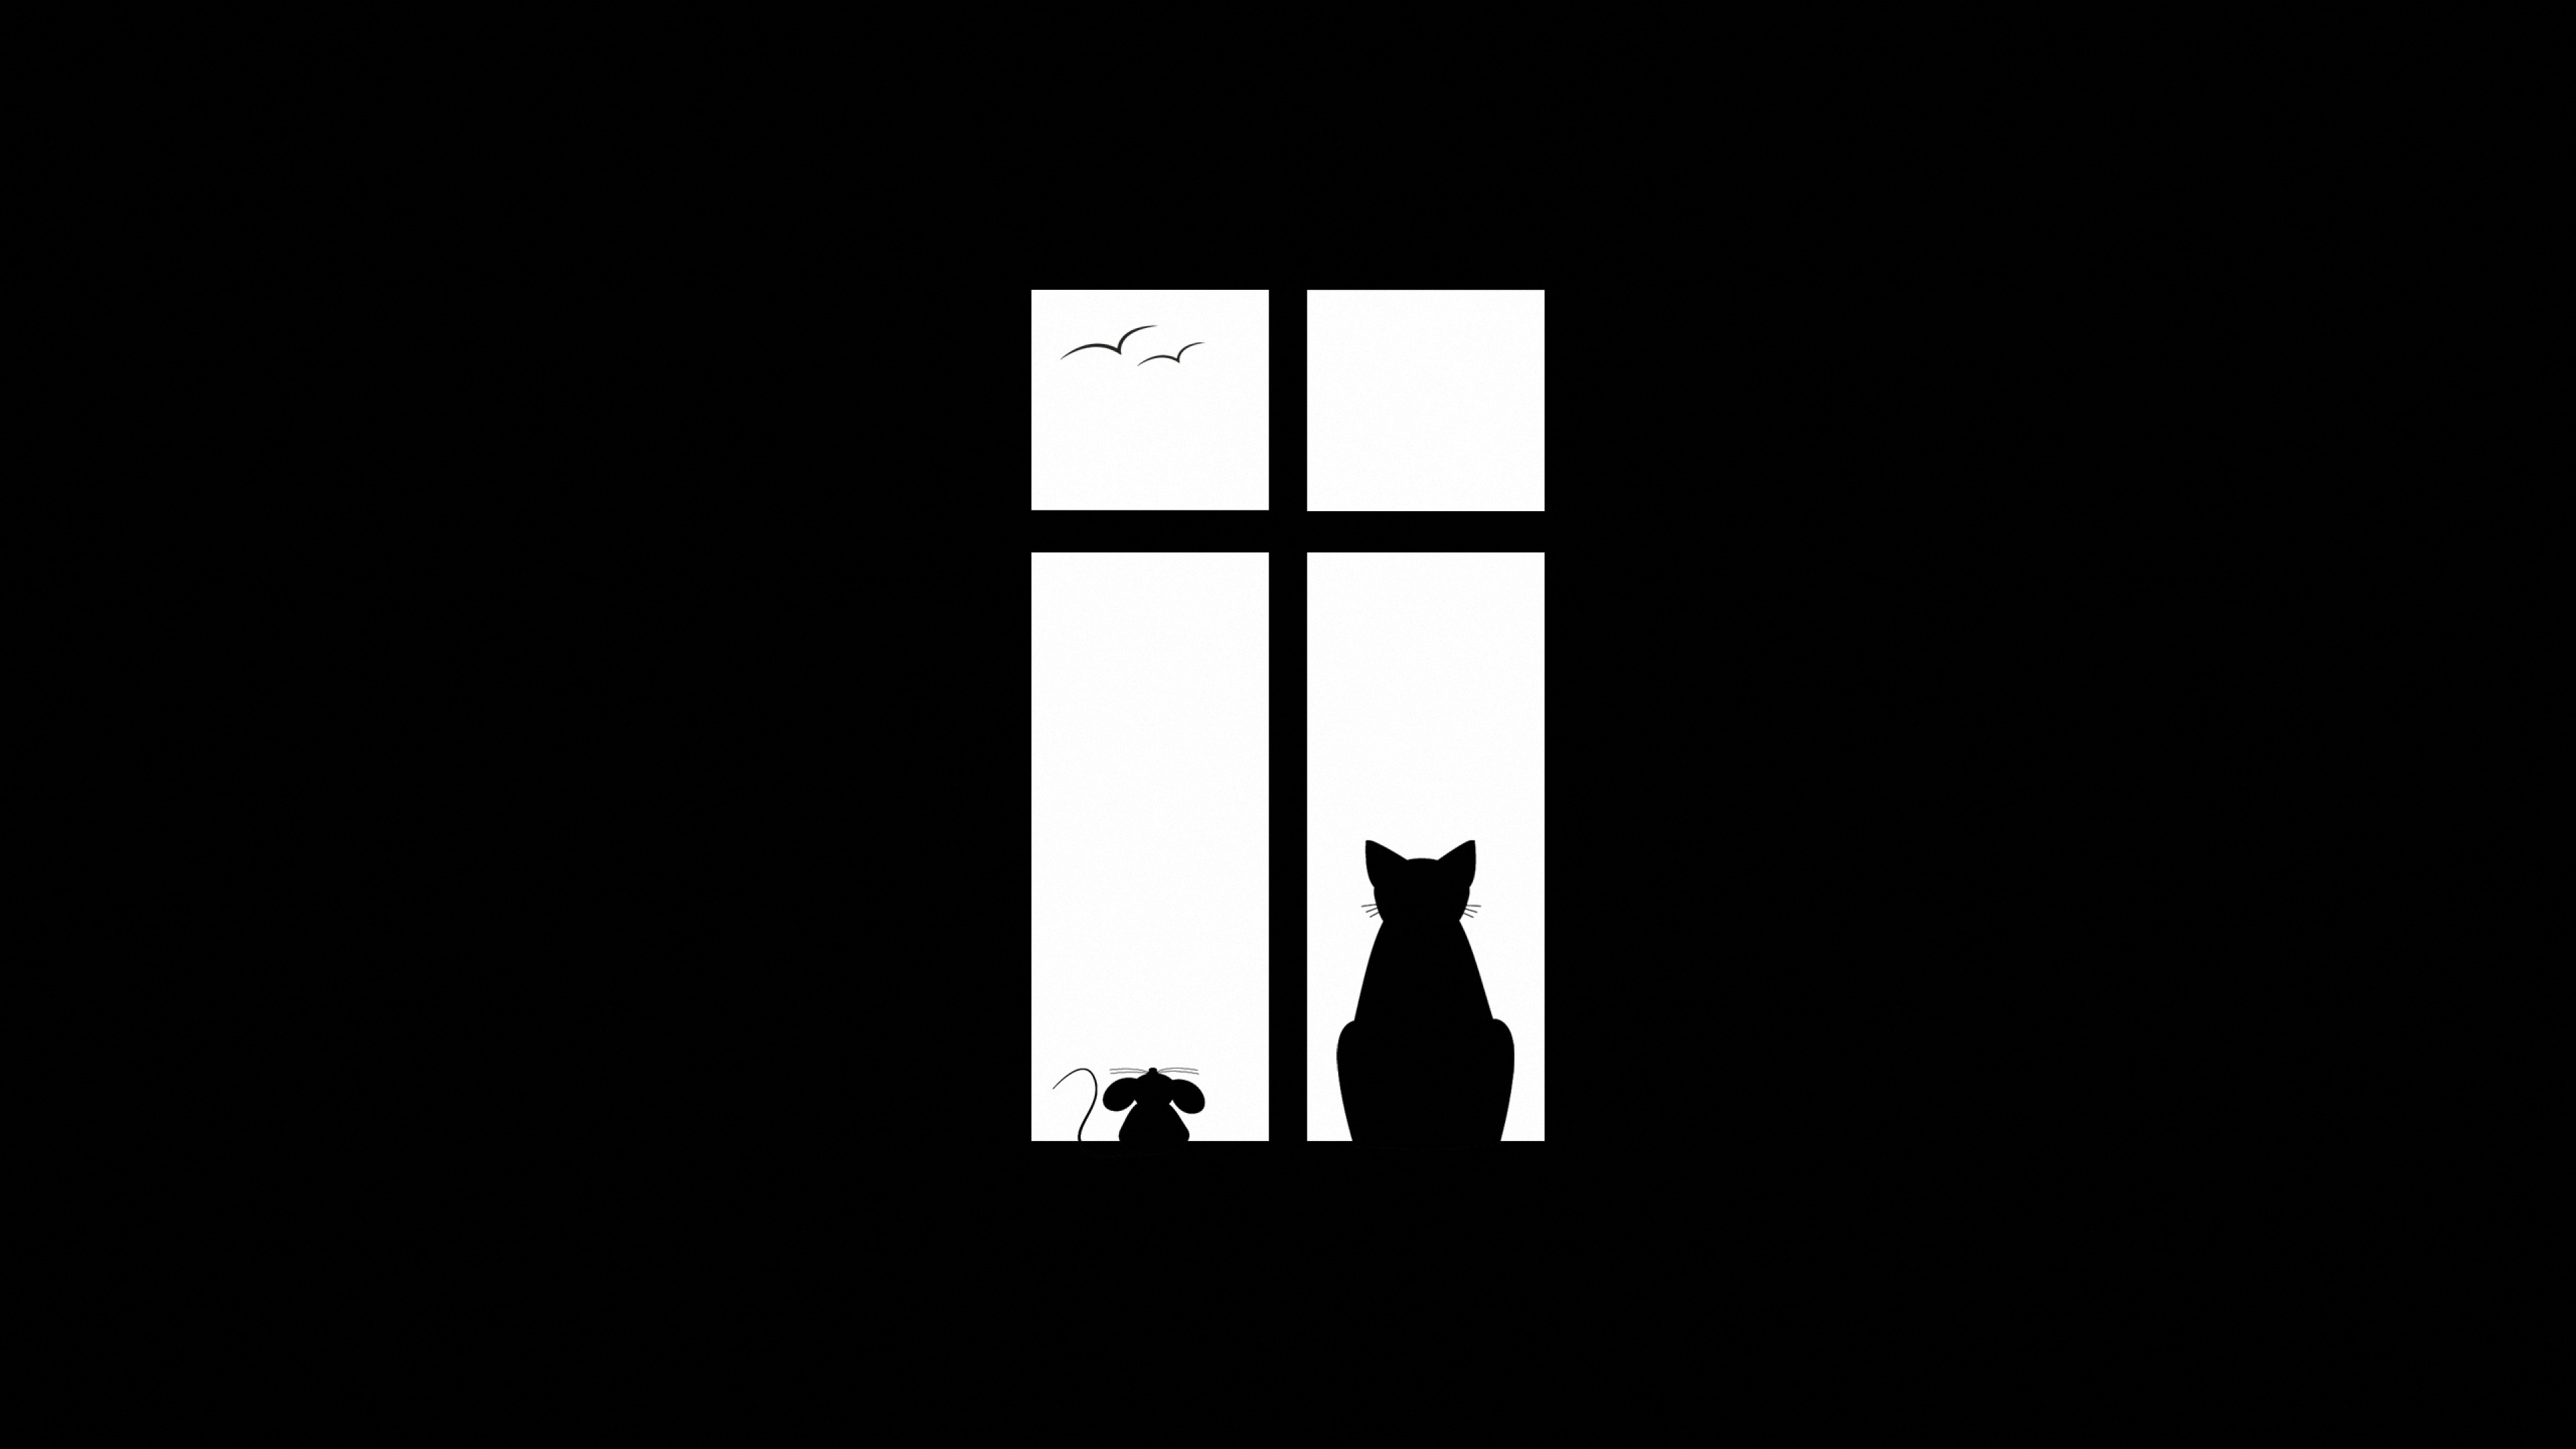 Download 3840x2160 Cat Picture Window Silhouette Wallpaper